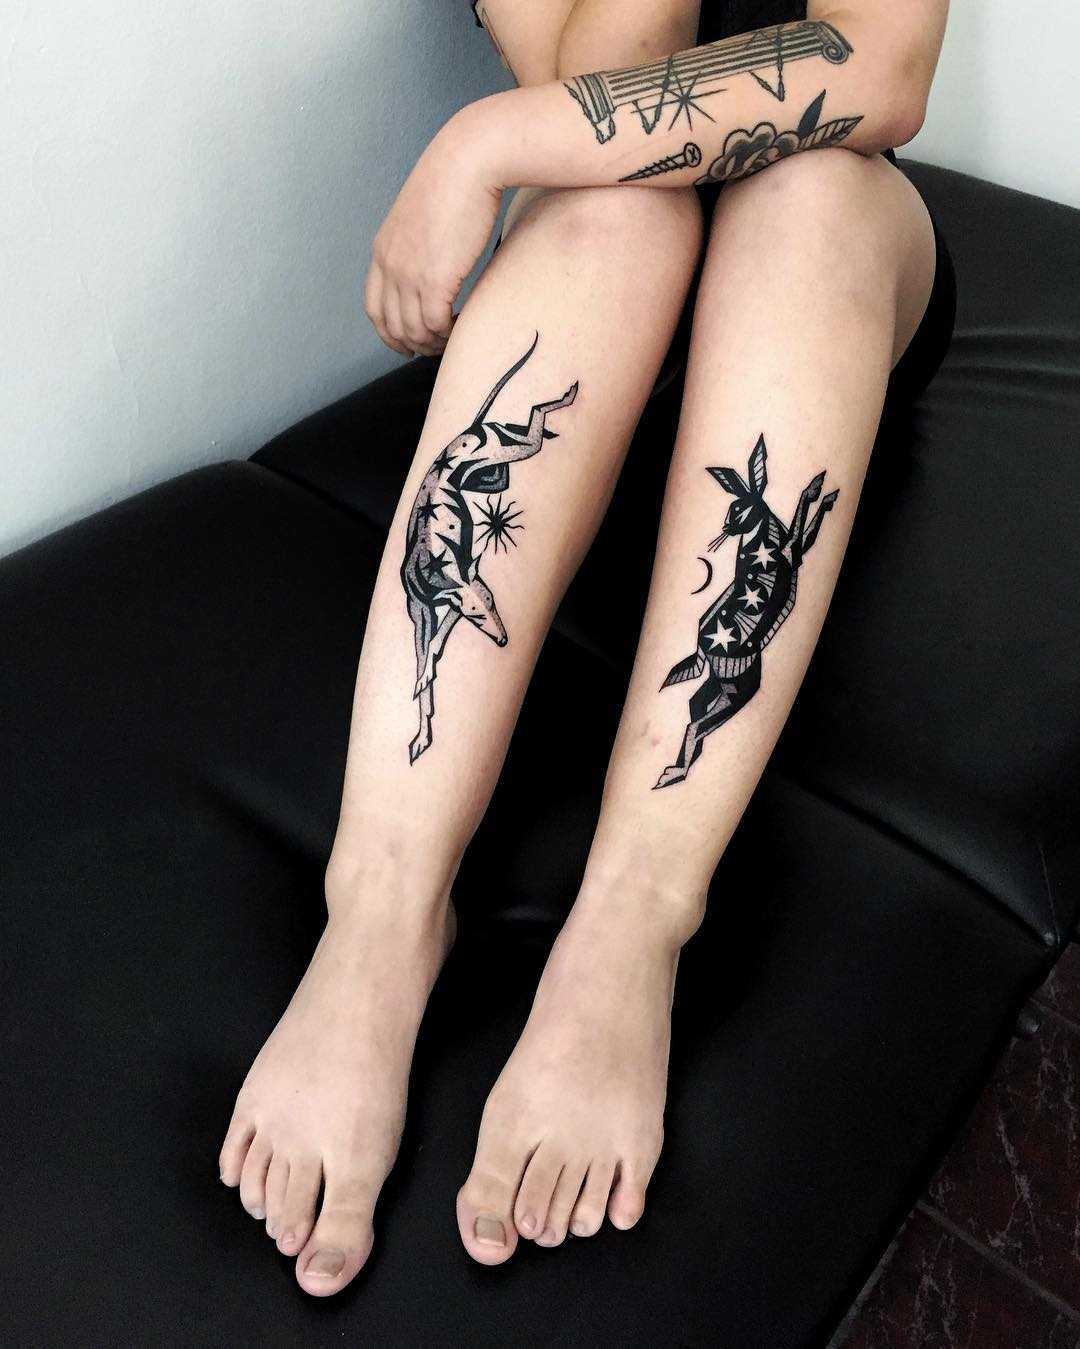 Rabbit and hound tattoos by Miedoalvacio